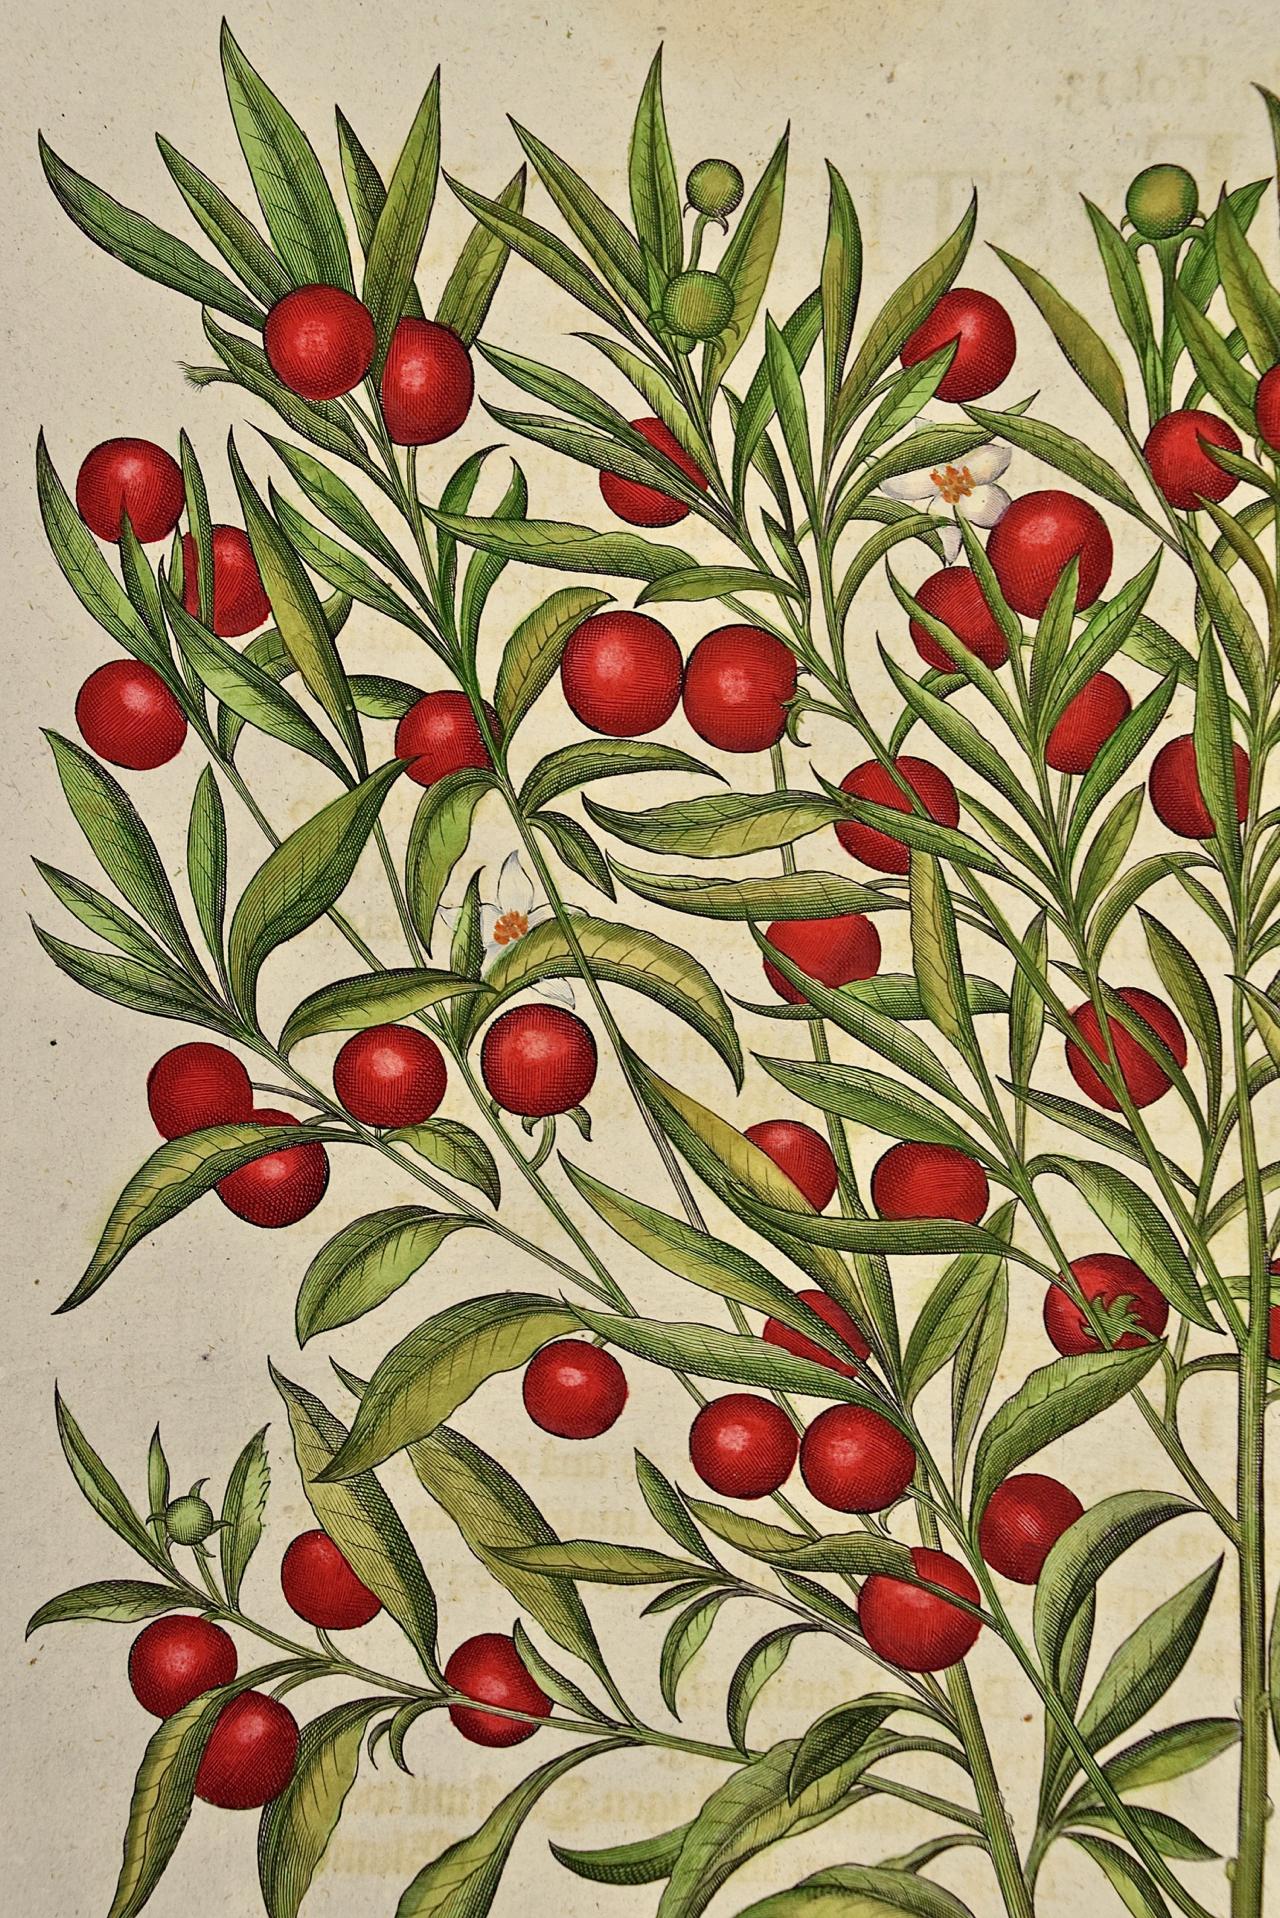 Flowering Jerusalem Cherry Plants: A Besler Hand-colored Botanical Engraving - Print by Basilius Besler